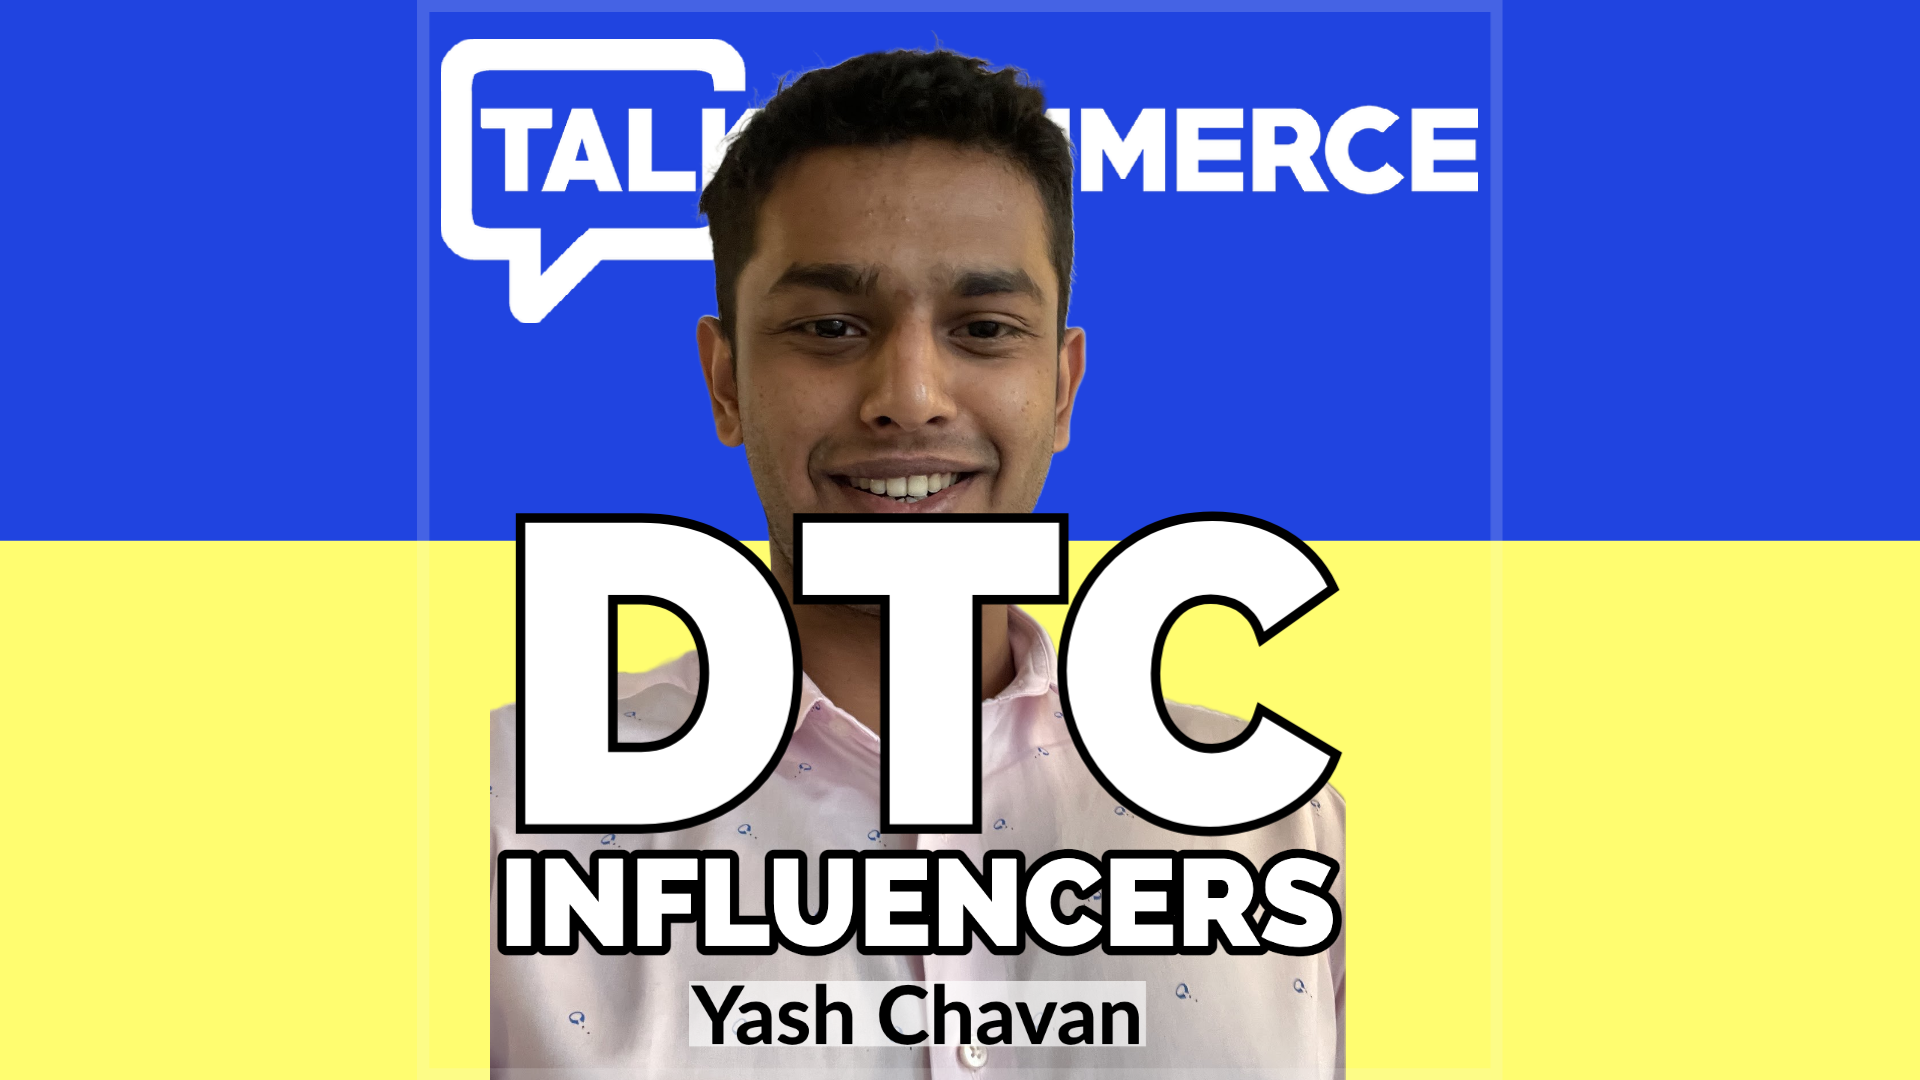 Talk-Commerce Yash Chavan